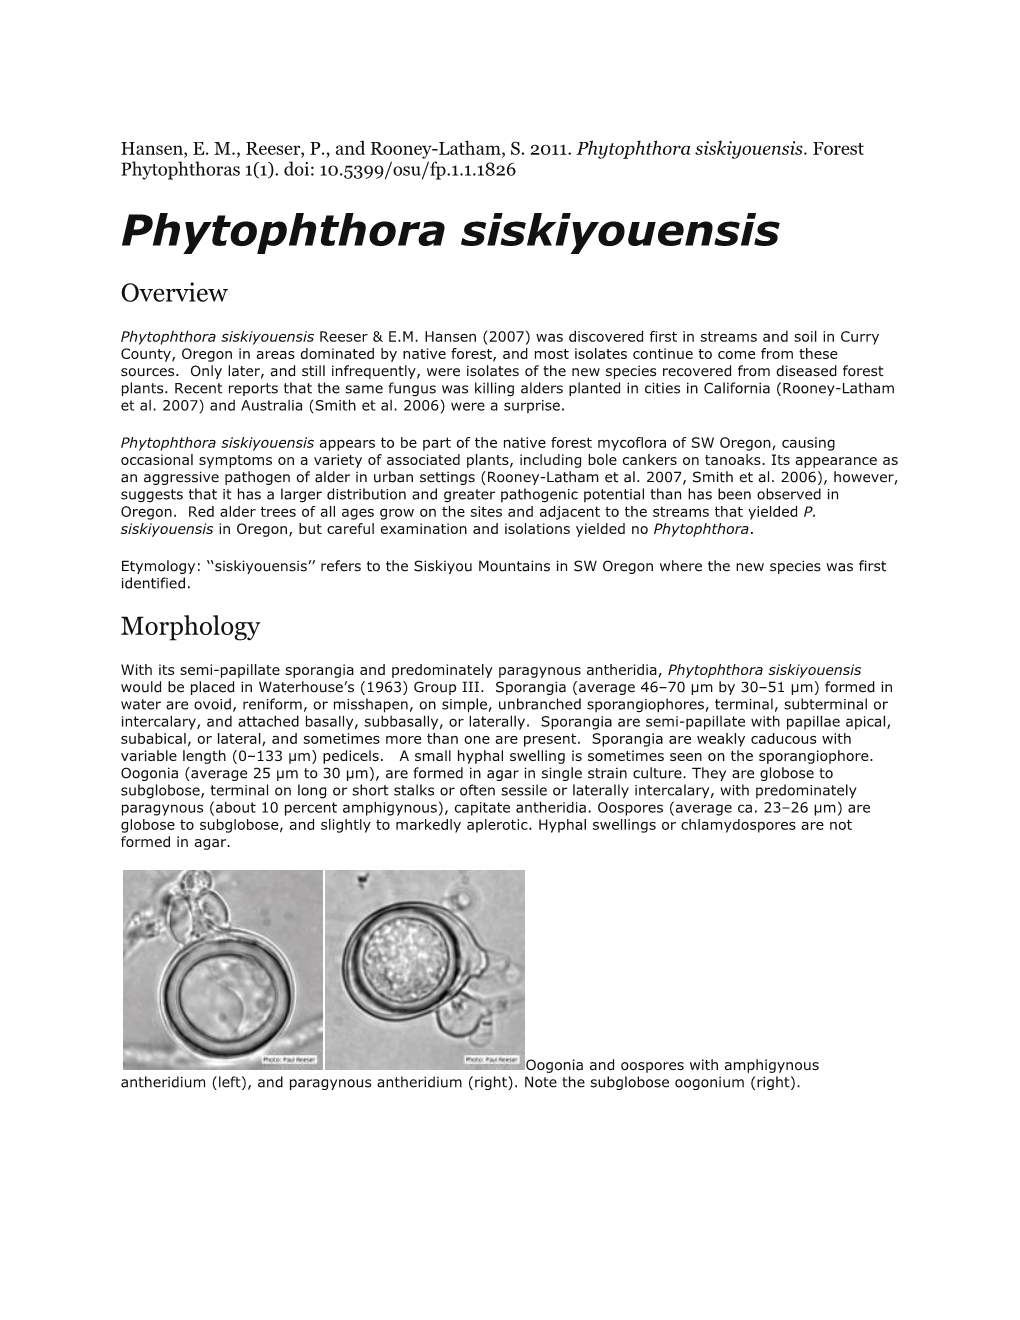 Phytophthora Siskiyouensis